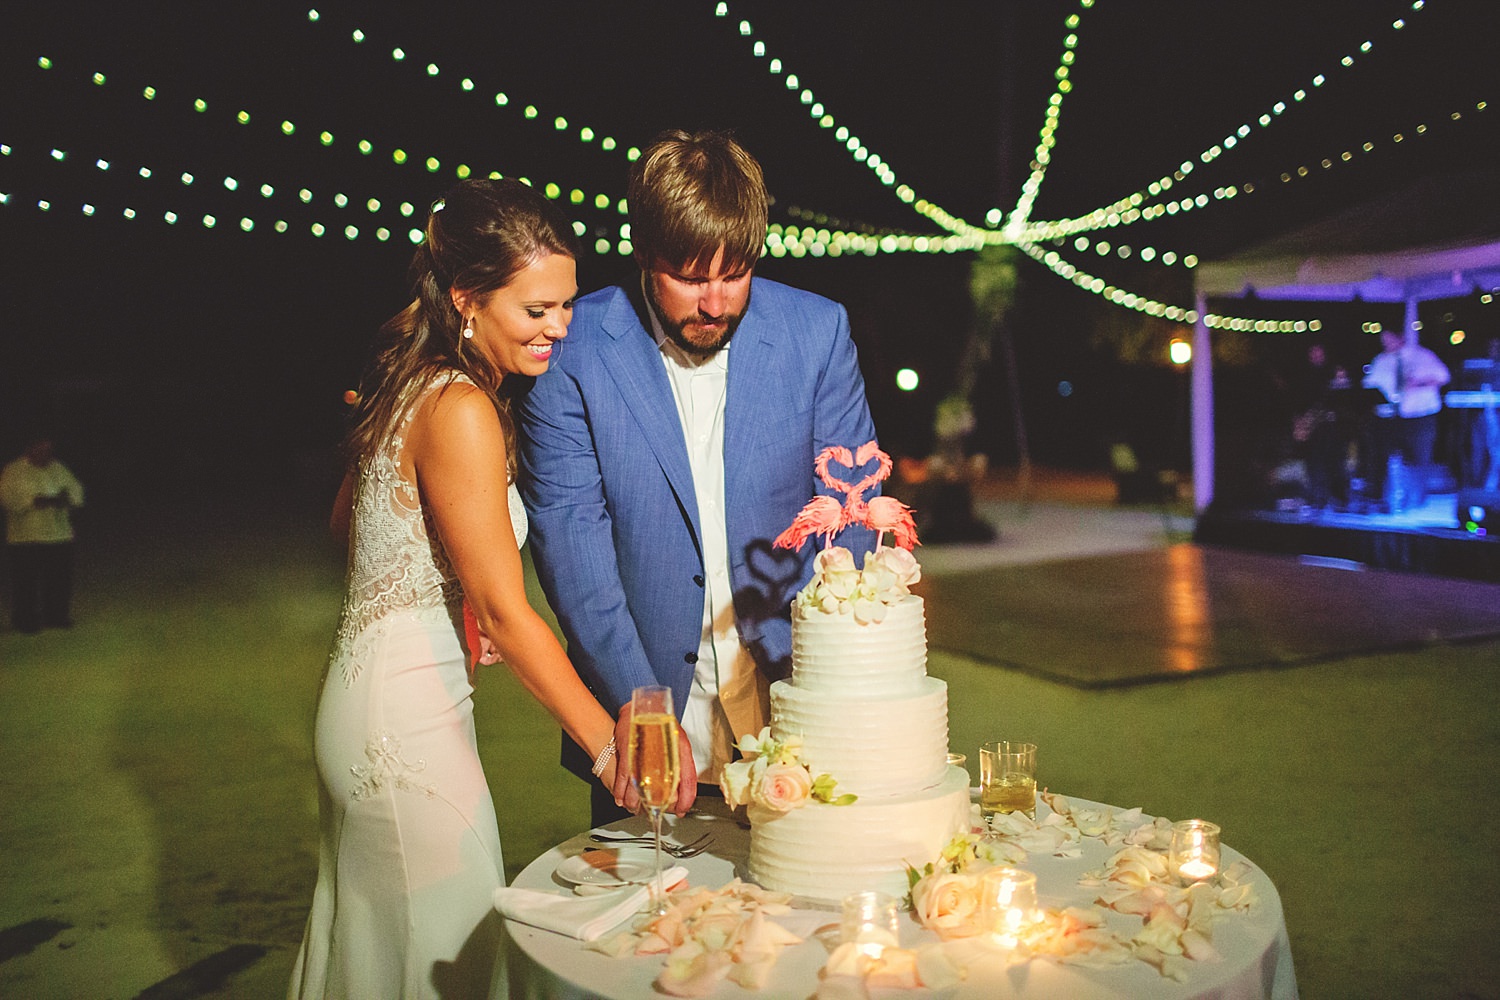 pierre's restaurant wedding: bride and groom cutting cake